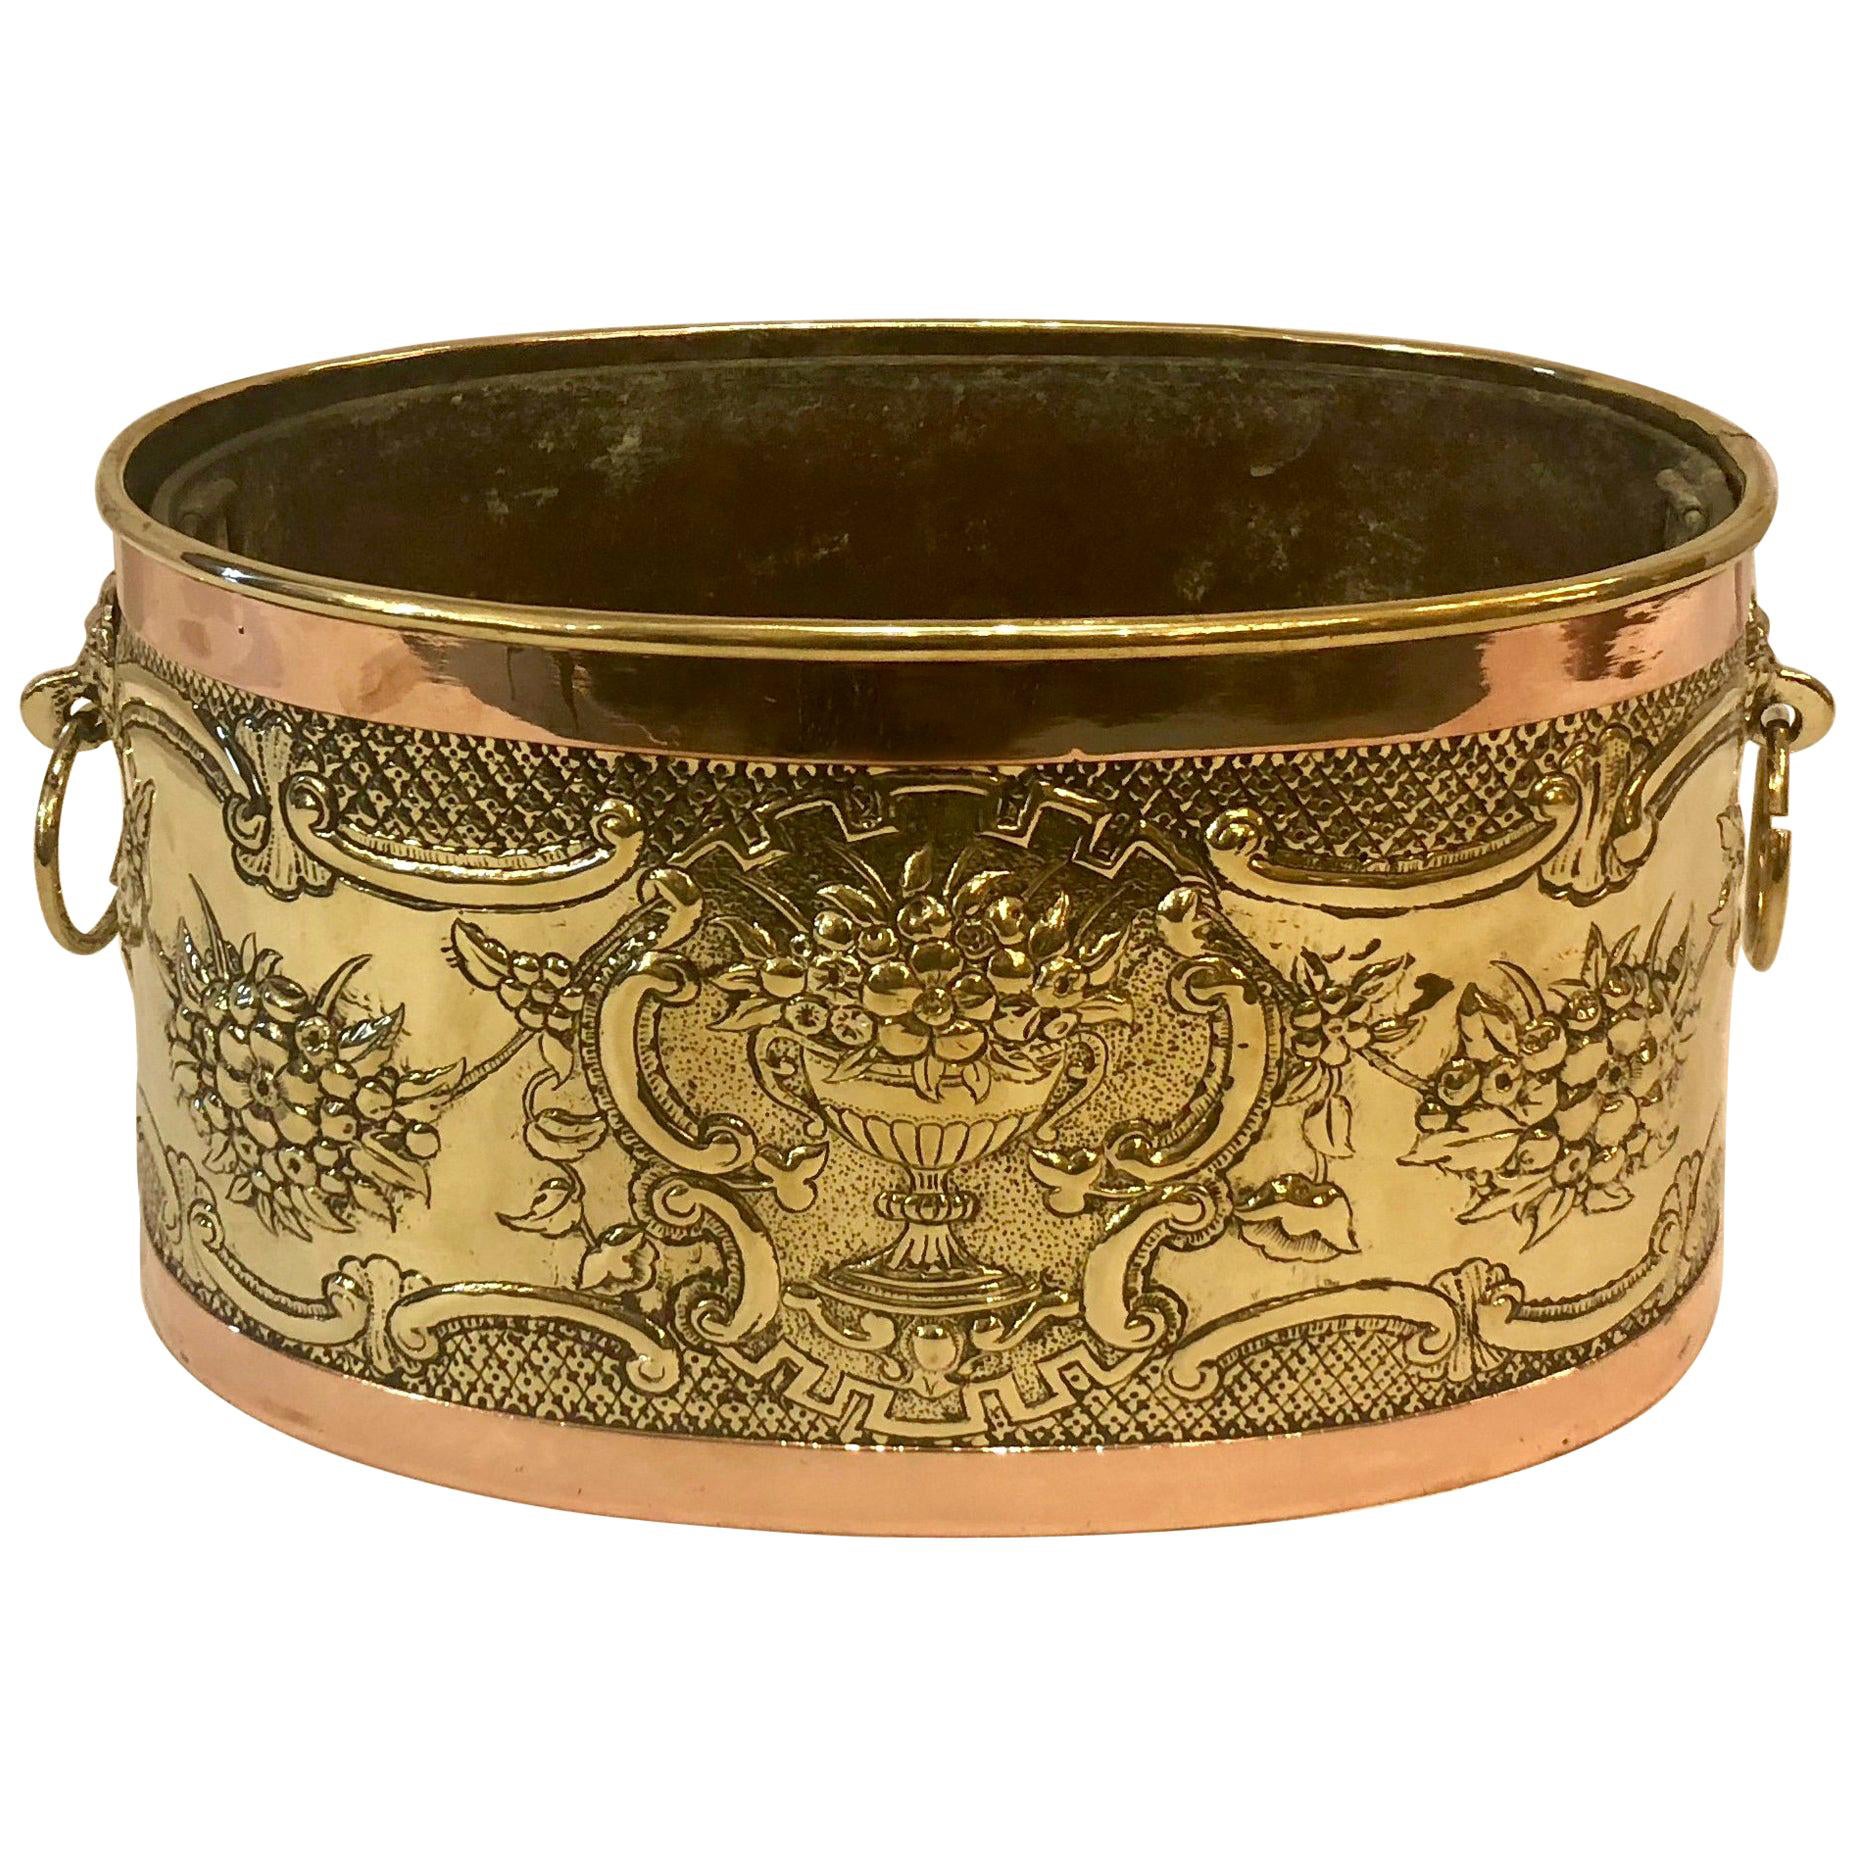 Antique Oval Brass and Copper Jardinière